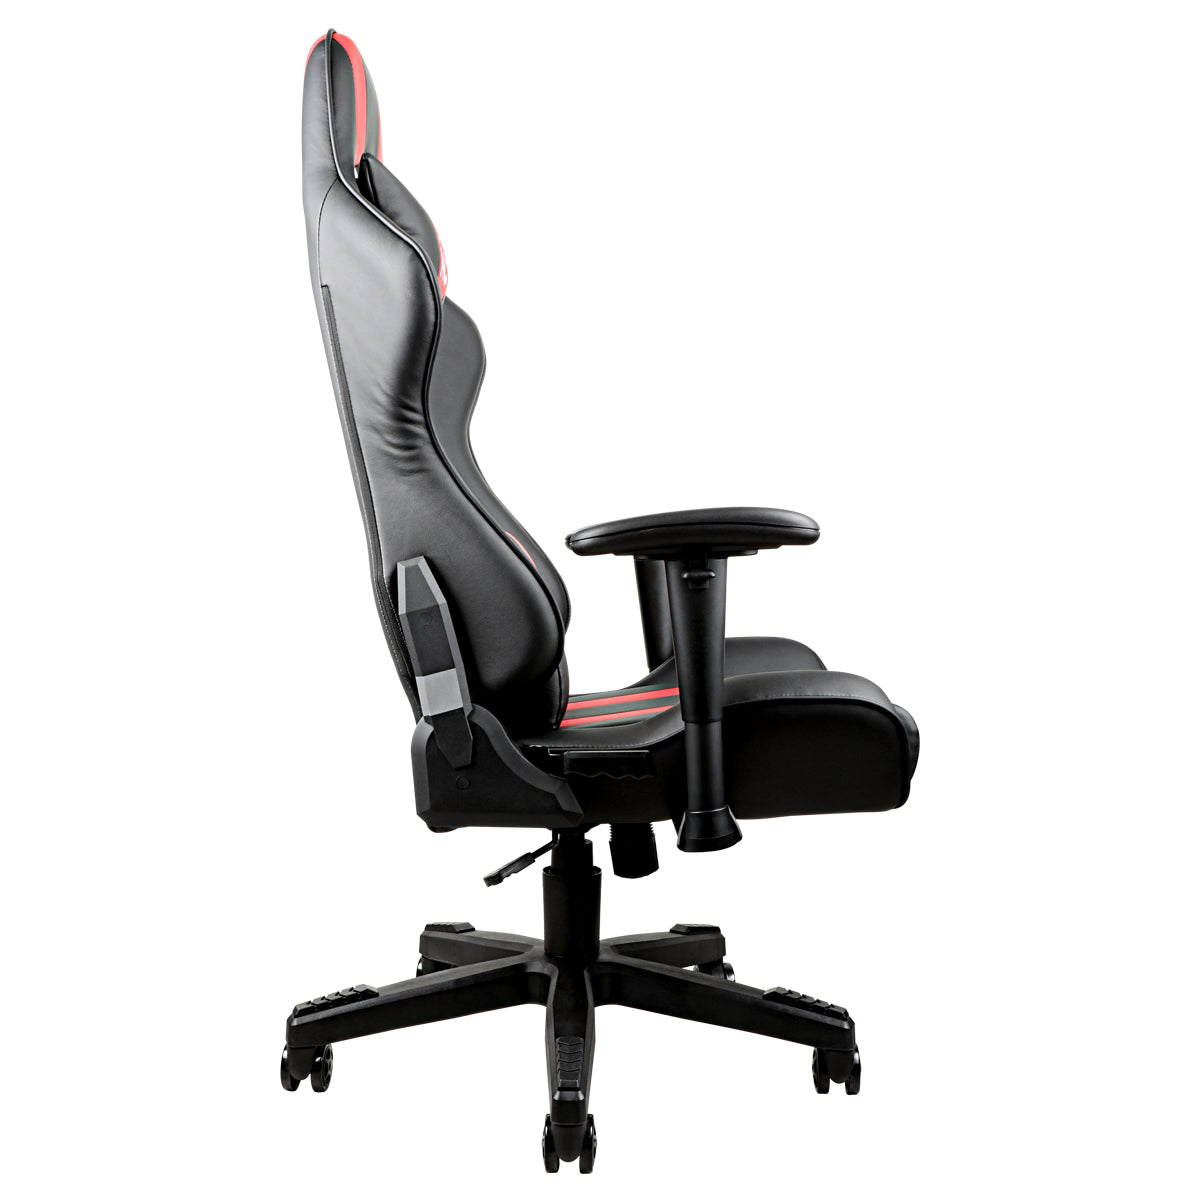 ABKO AGC15 韓國 Gaming Chair 電競椅 遊戲扶手椅 高背椅 Armchair 辨公室座椅 大班椅